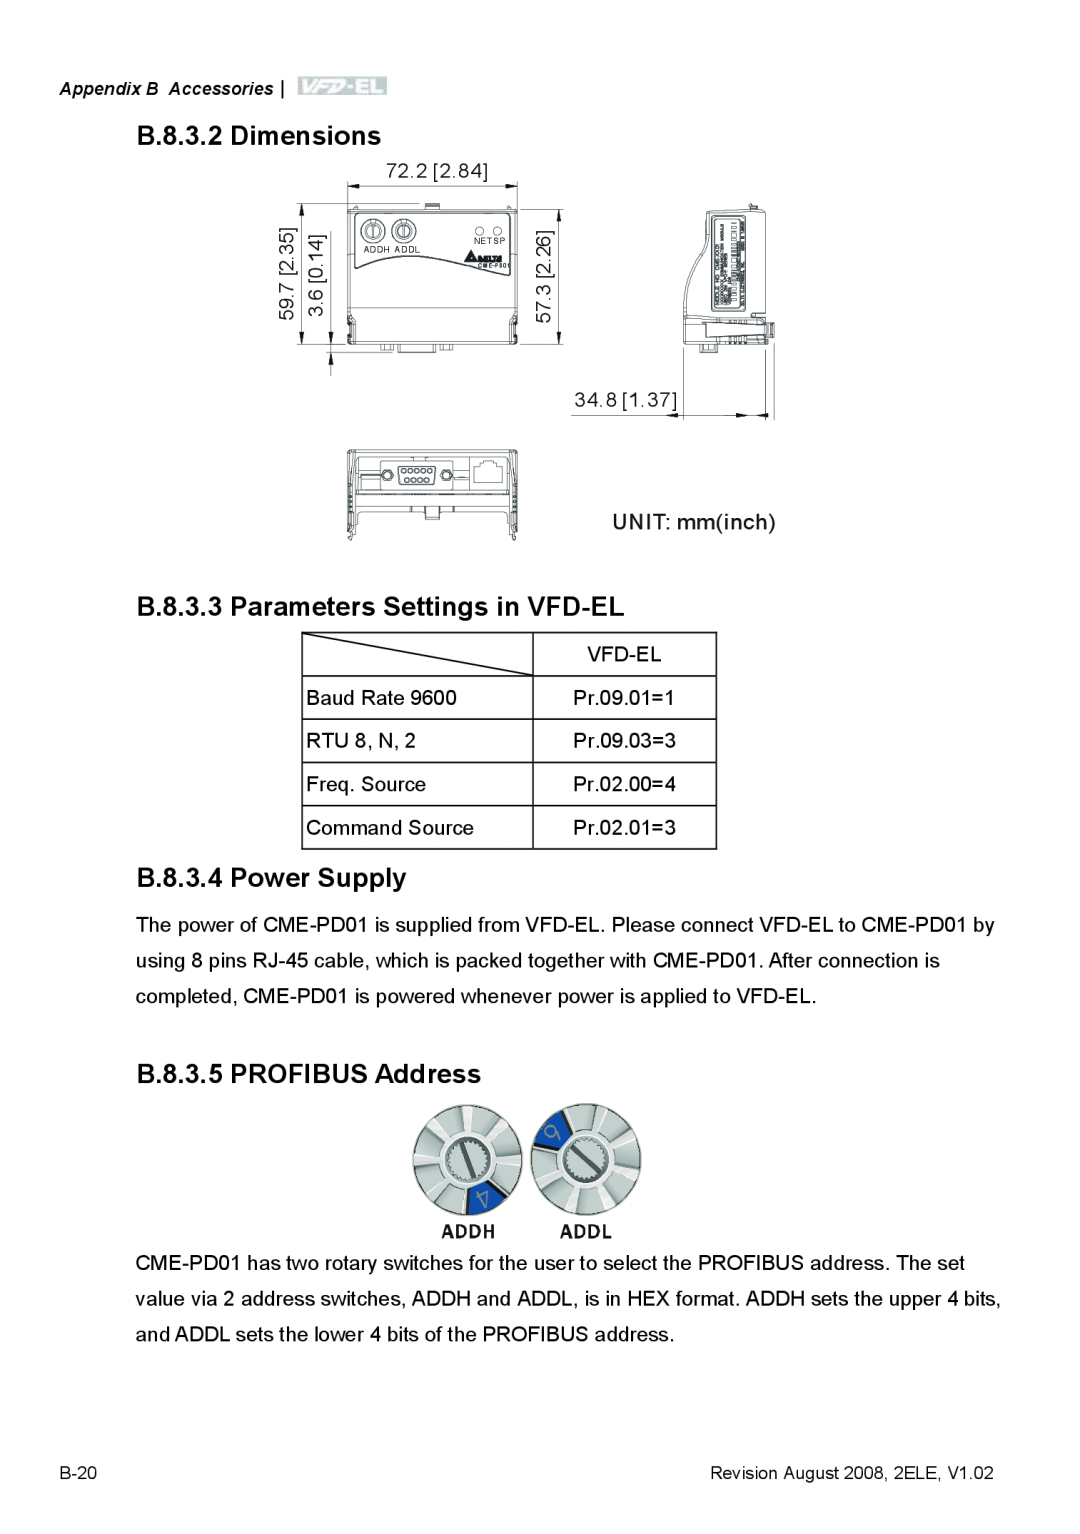 Delta Electronics manual B.8.3.2 Dimensions, B.8.3.3 Parameters Settings in VFD-EL, B.8.3.4 Power Supply, UNIT mminch 